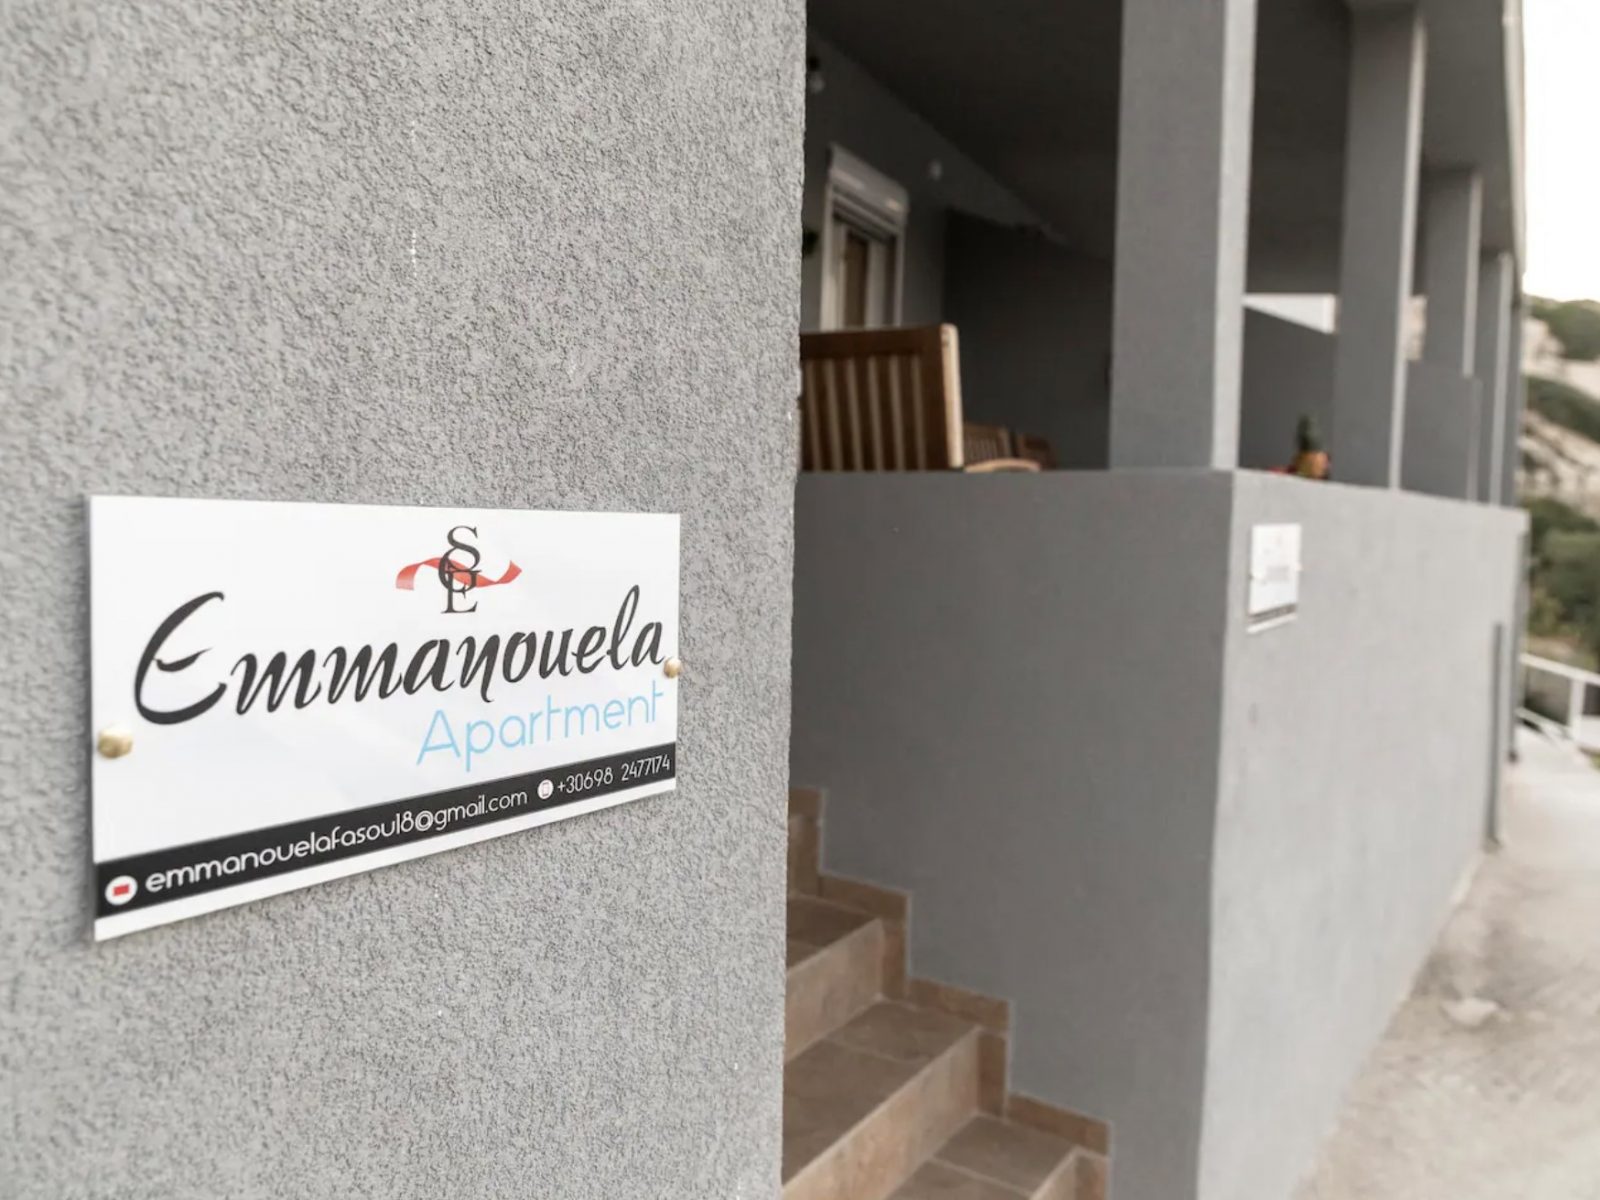 Emmanouela Apartment in Matala